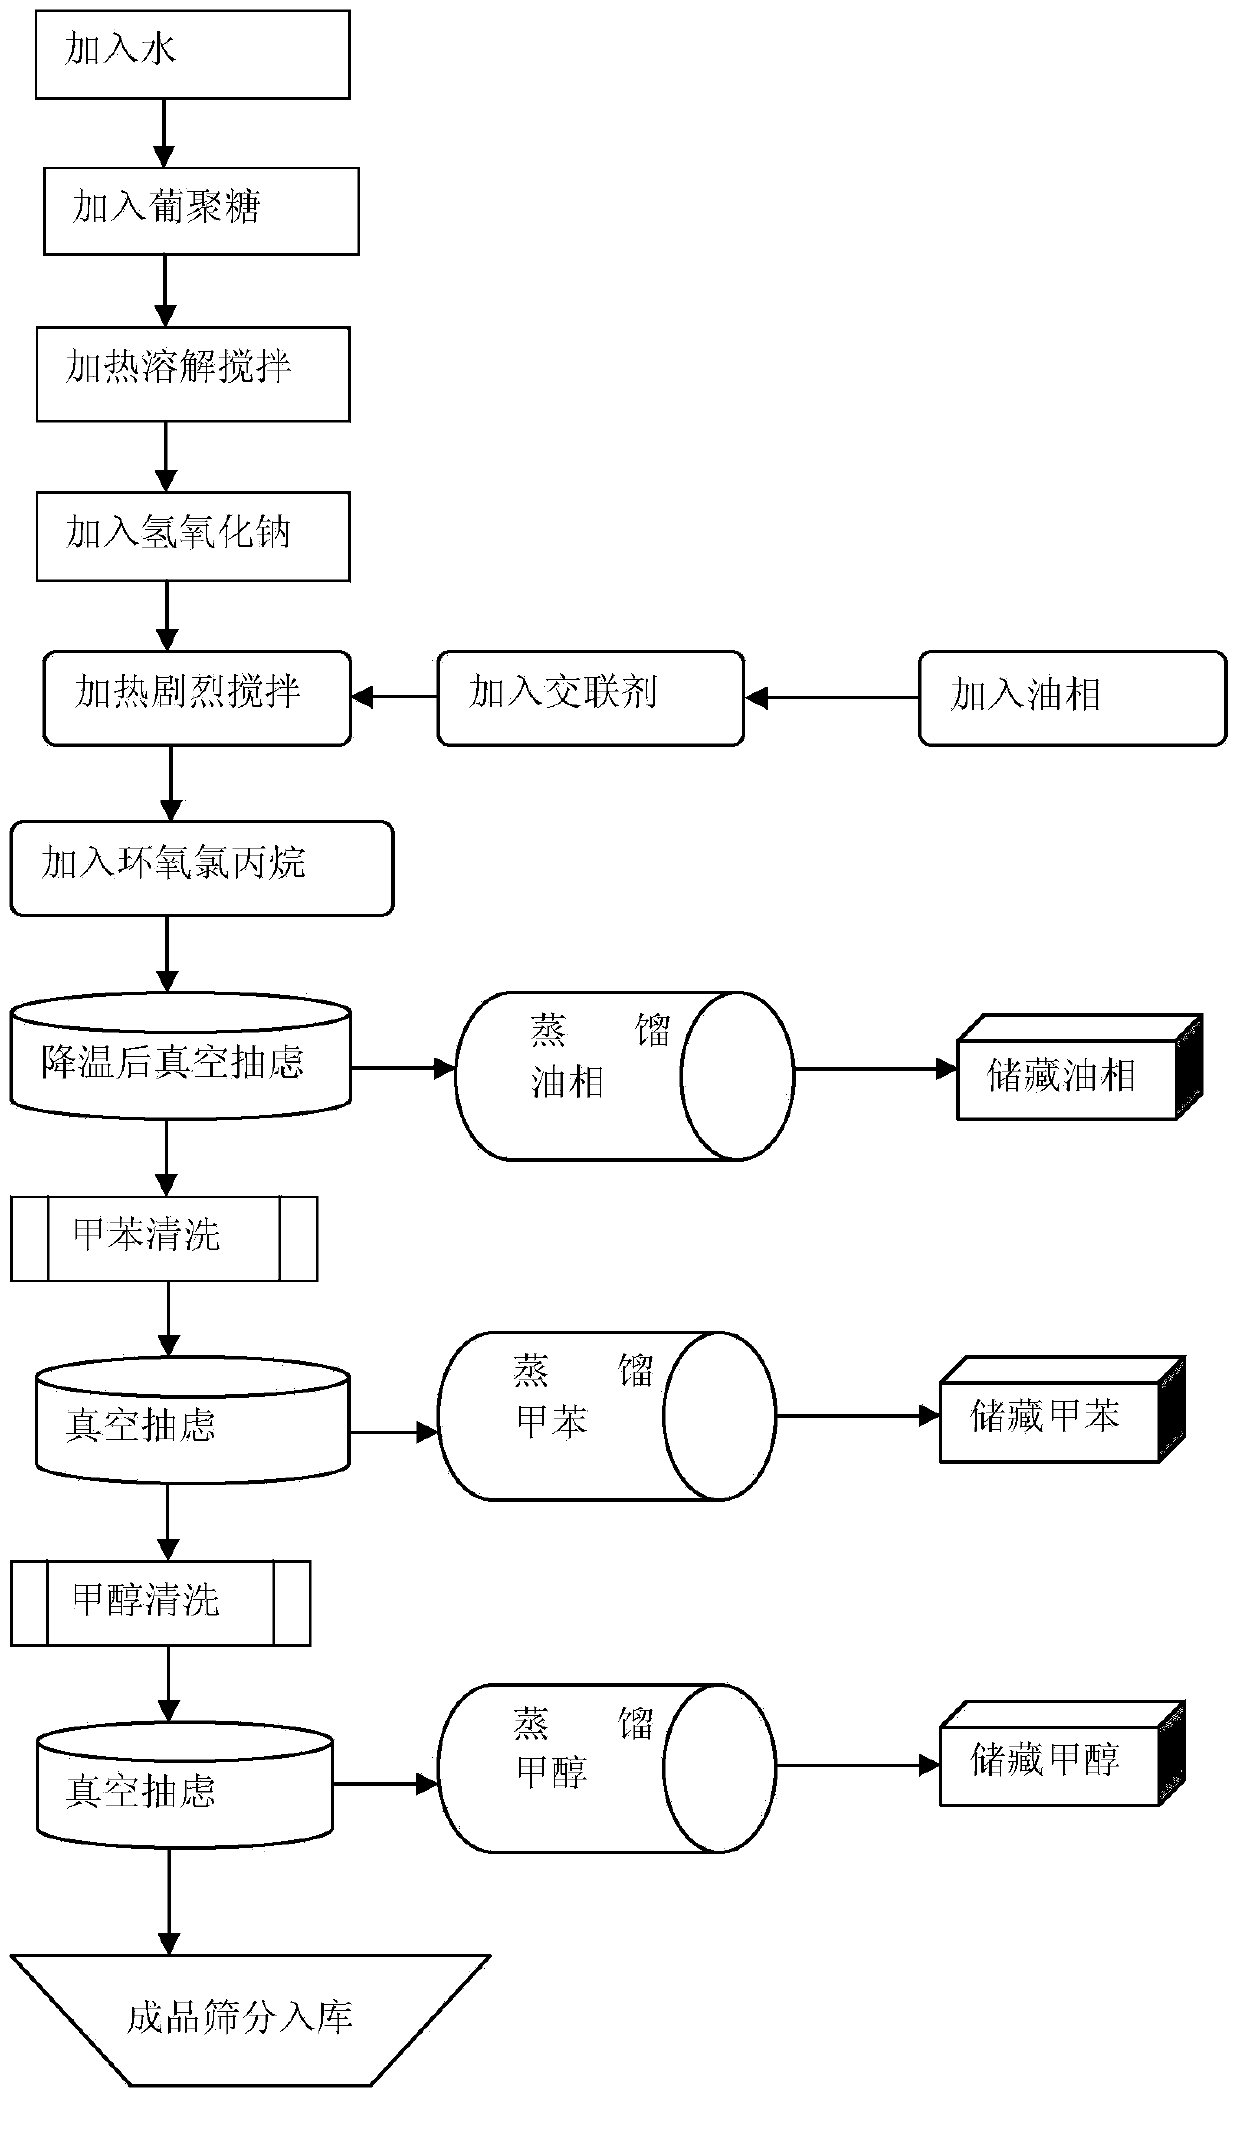 Preparation method for glucan bioseparation and purification medium